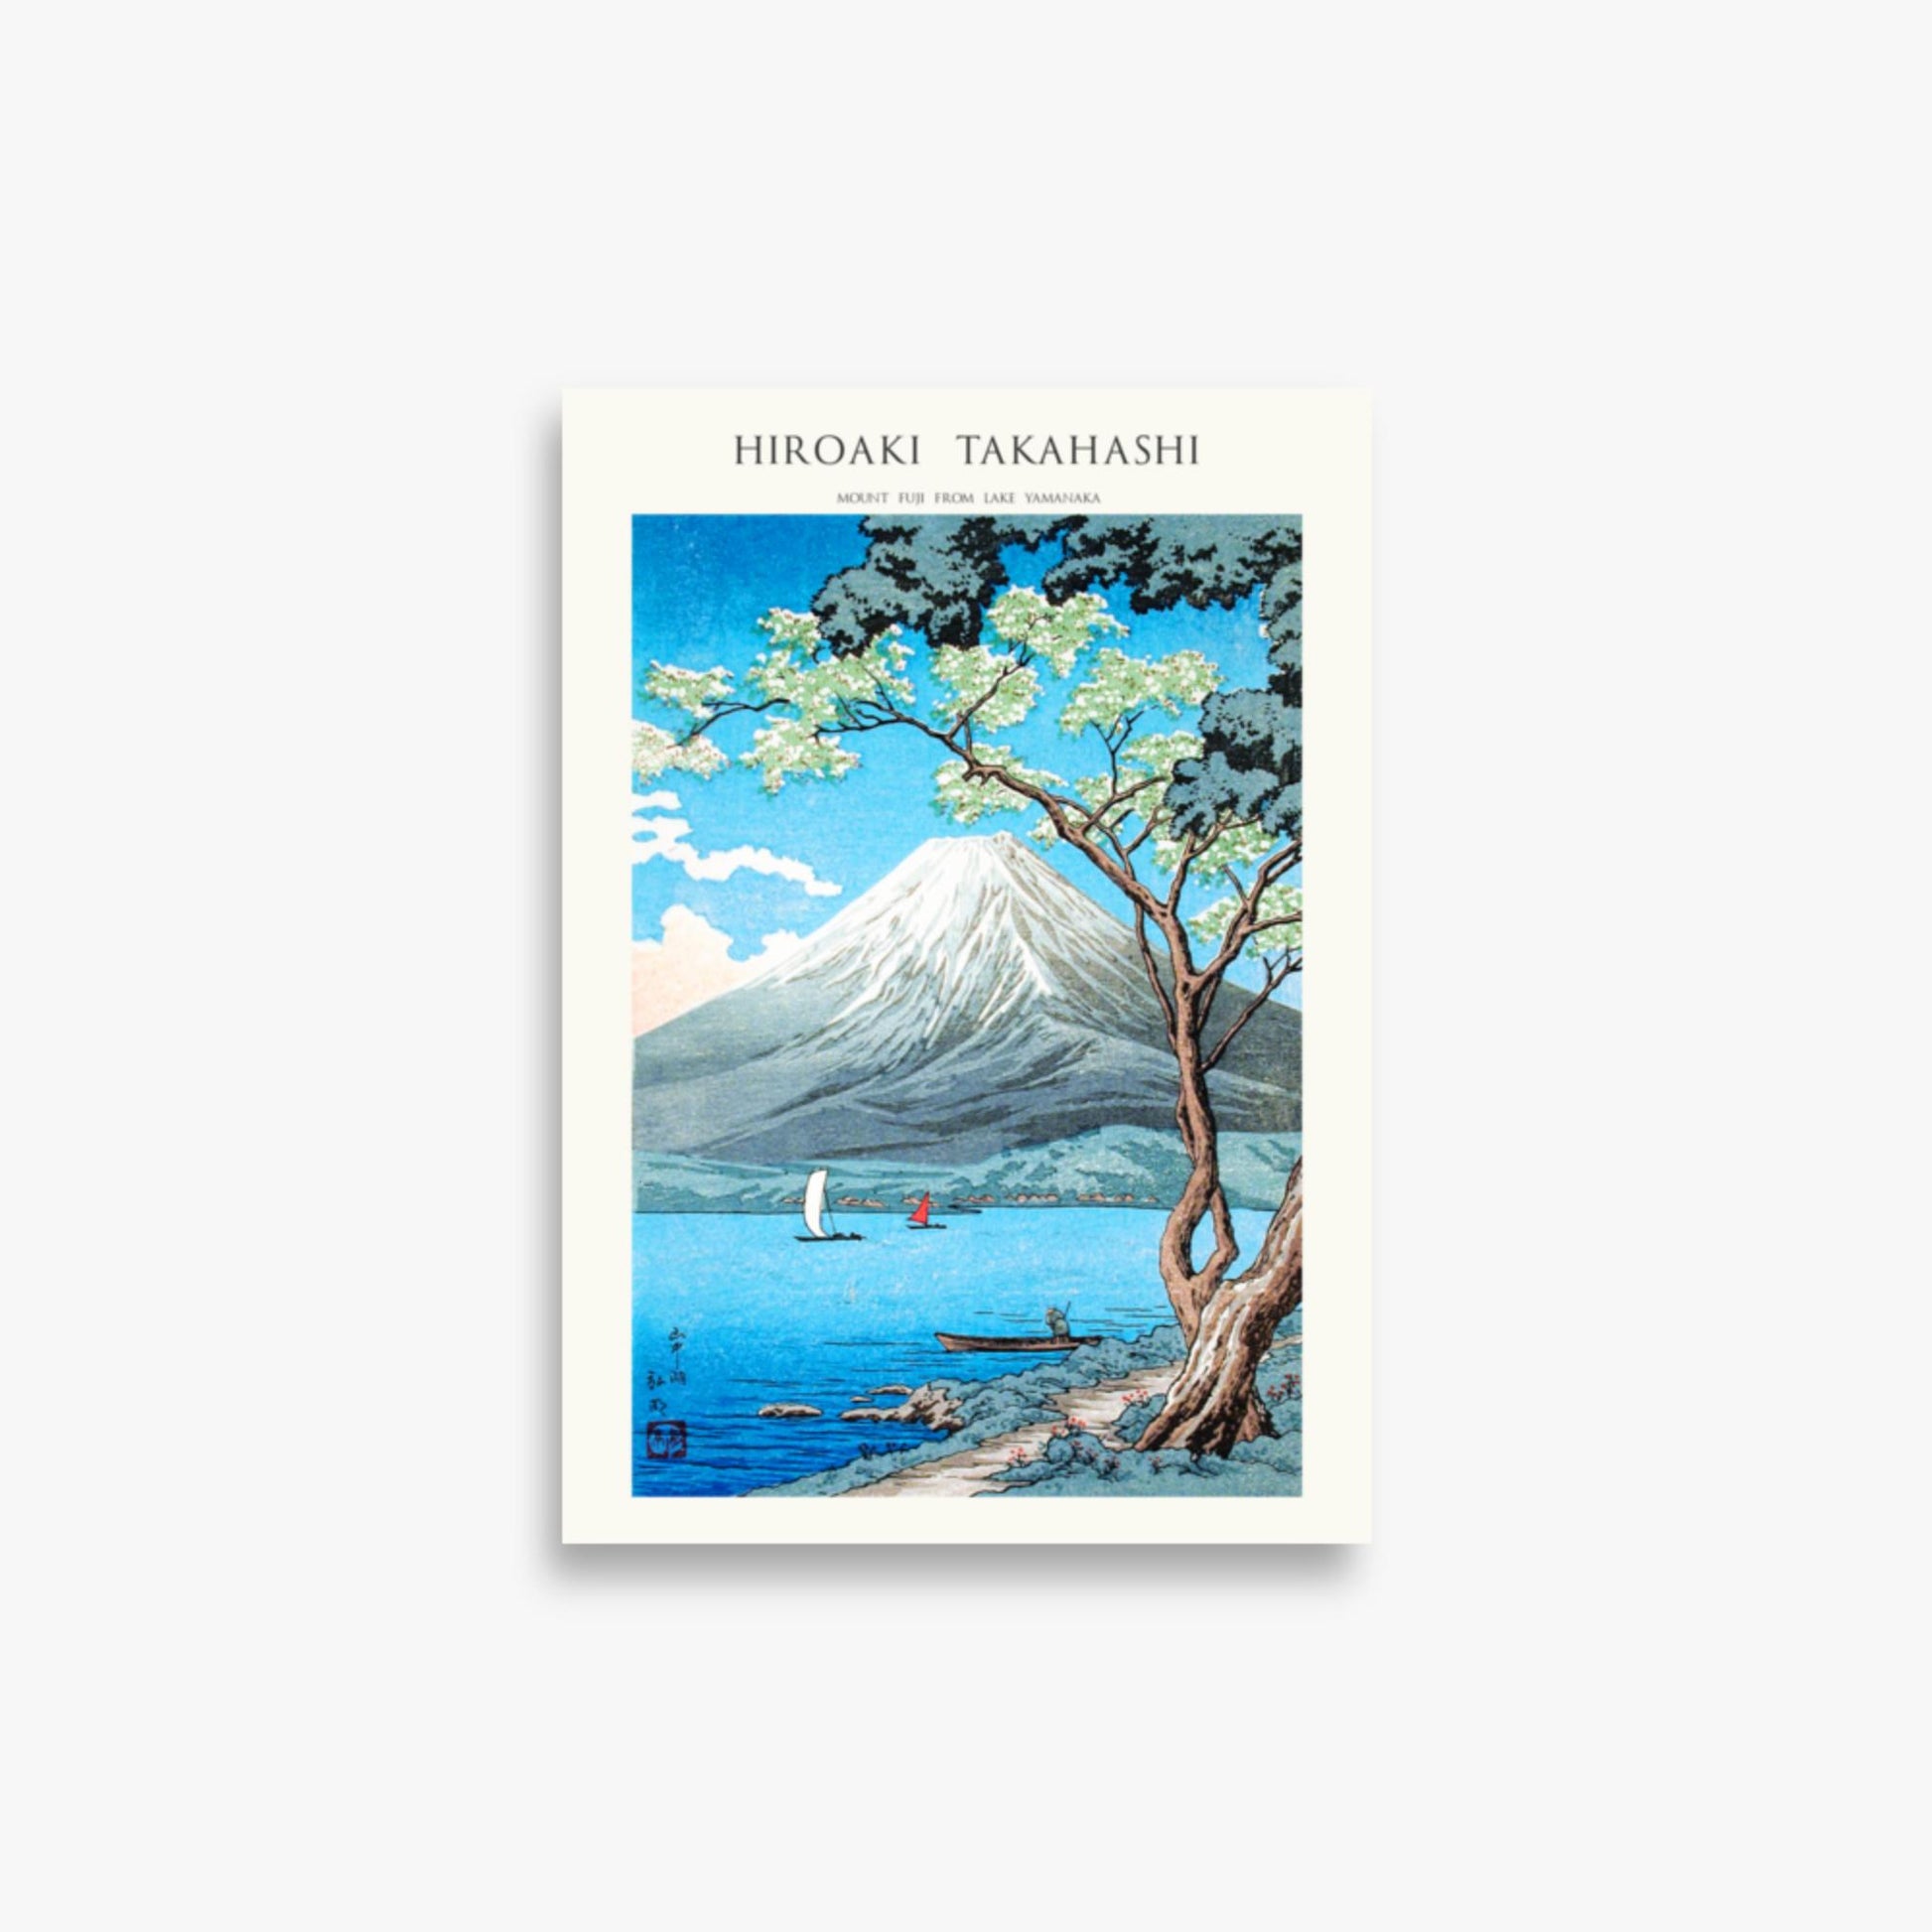 Hiroaki Takahashi - Mount Fuji from Lake Yamanaka - Decoration 21x30 cm Poster